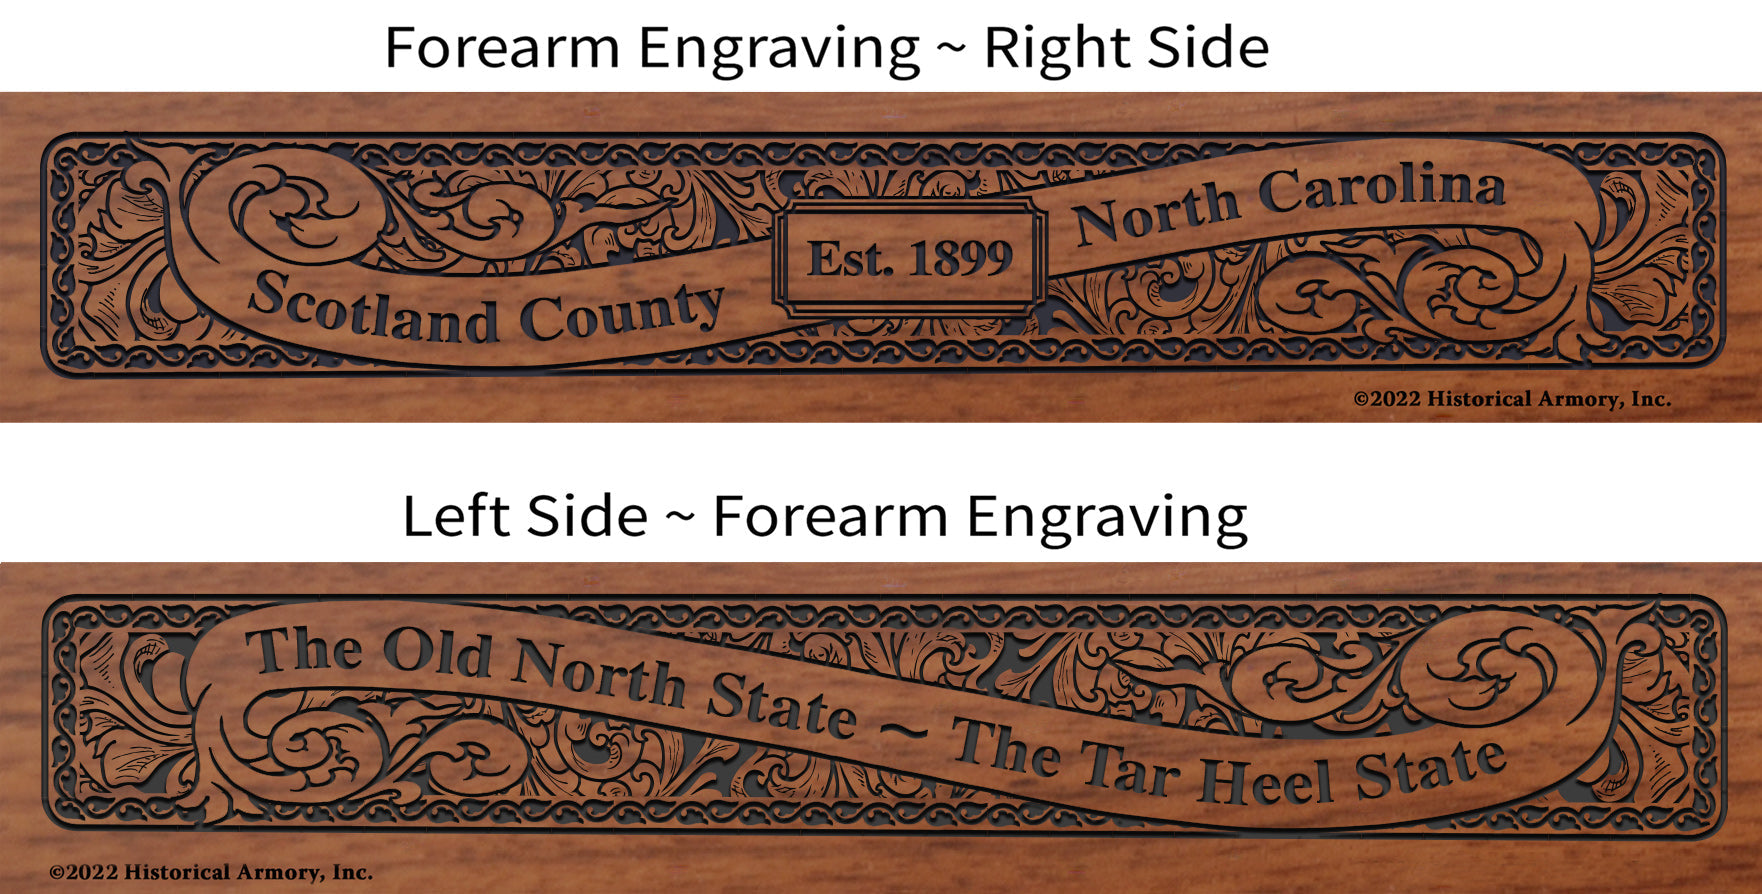 Scotland County North Carolina Engraved Rifle Forearm